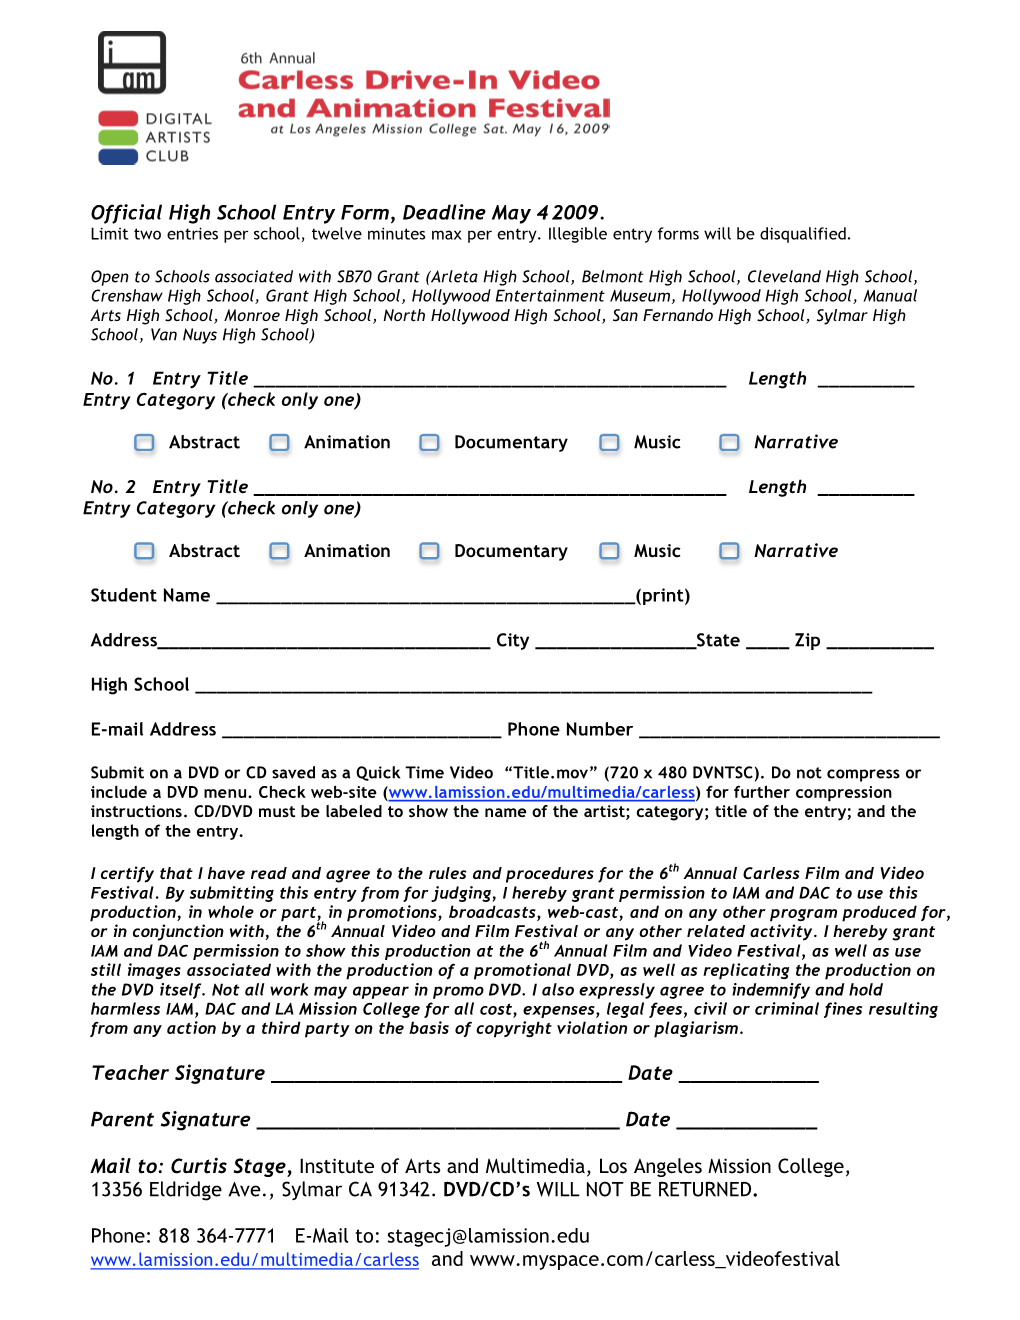 Official High School Entry Form, Deadline May 42009. Teacher